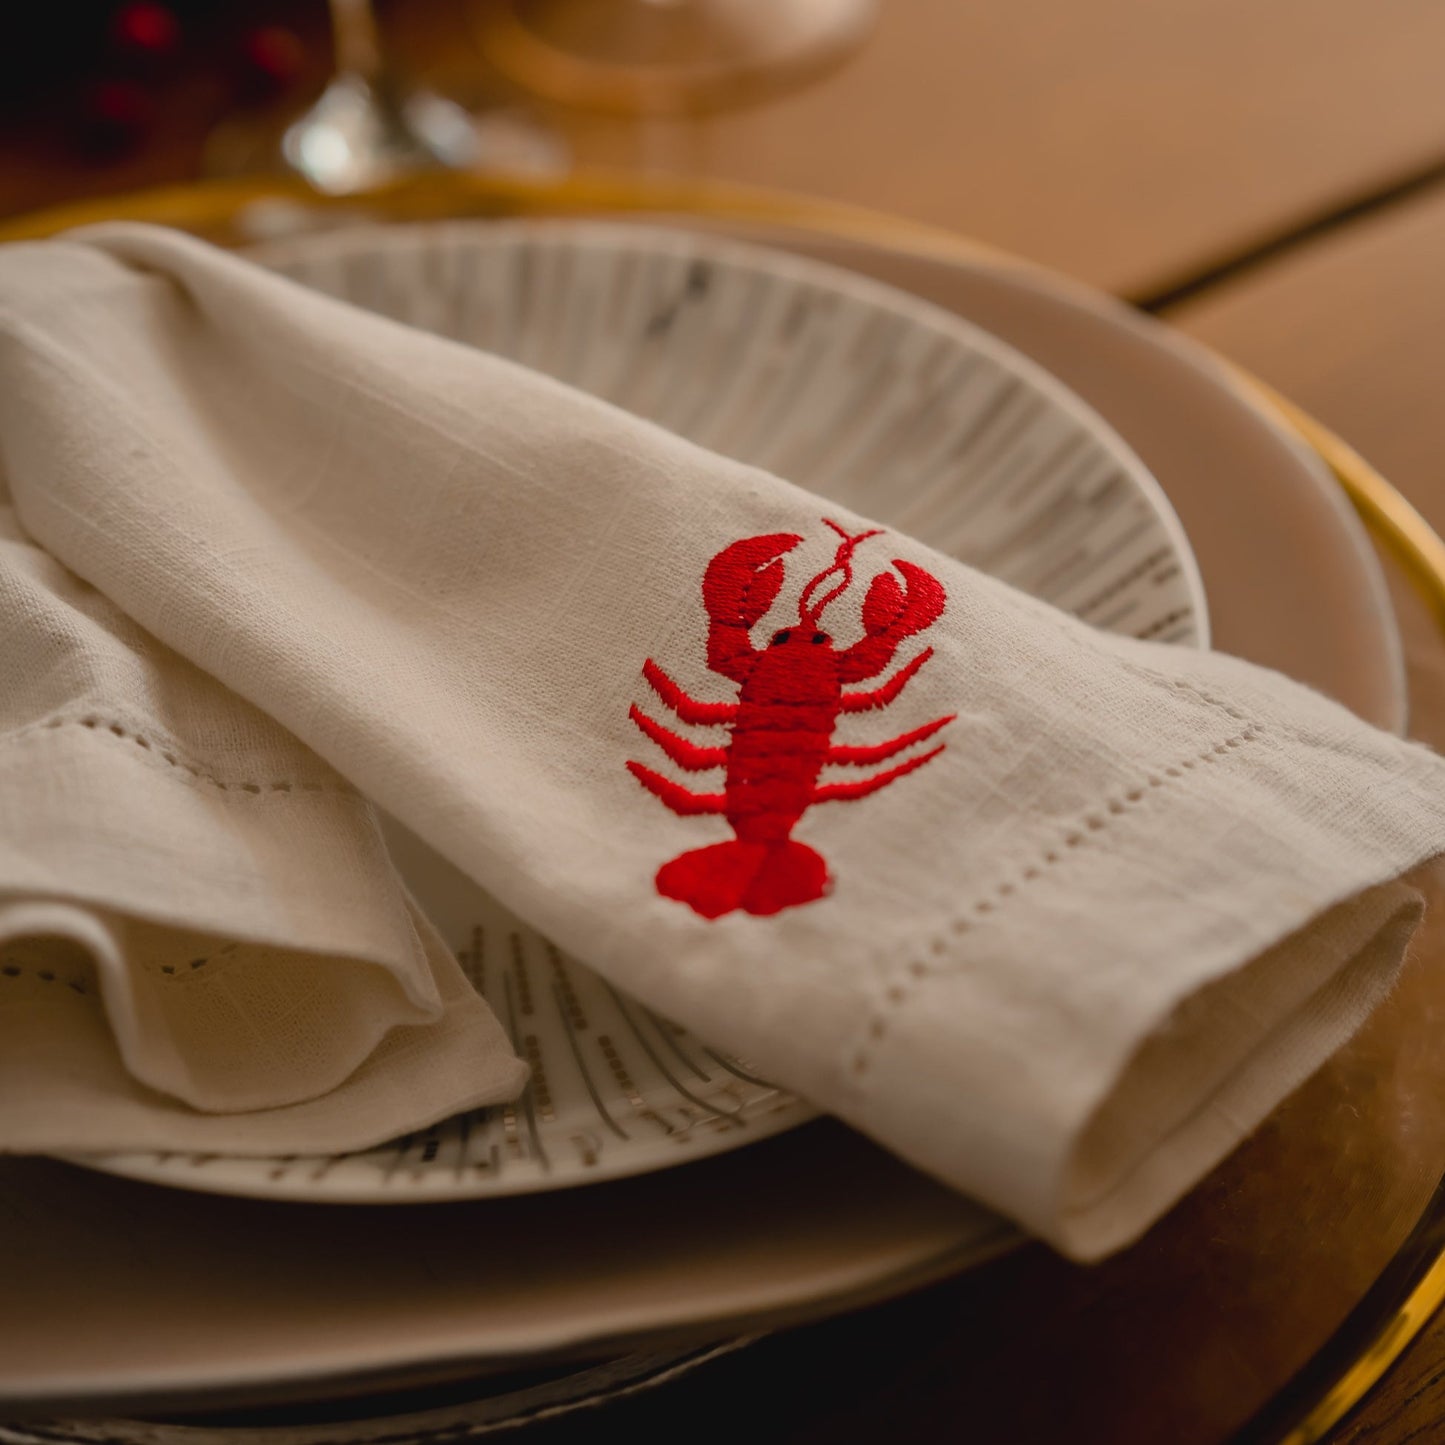 The Lobster Napkin